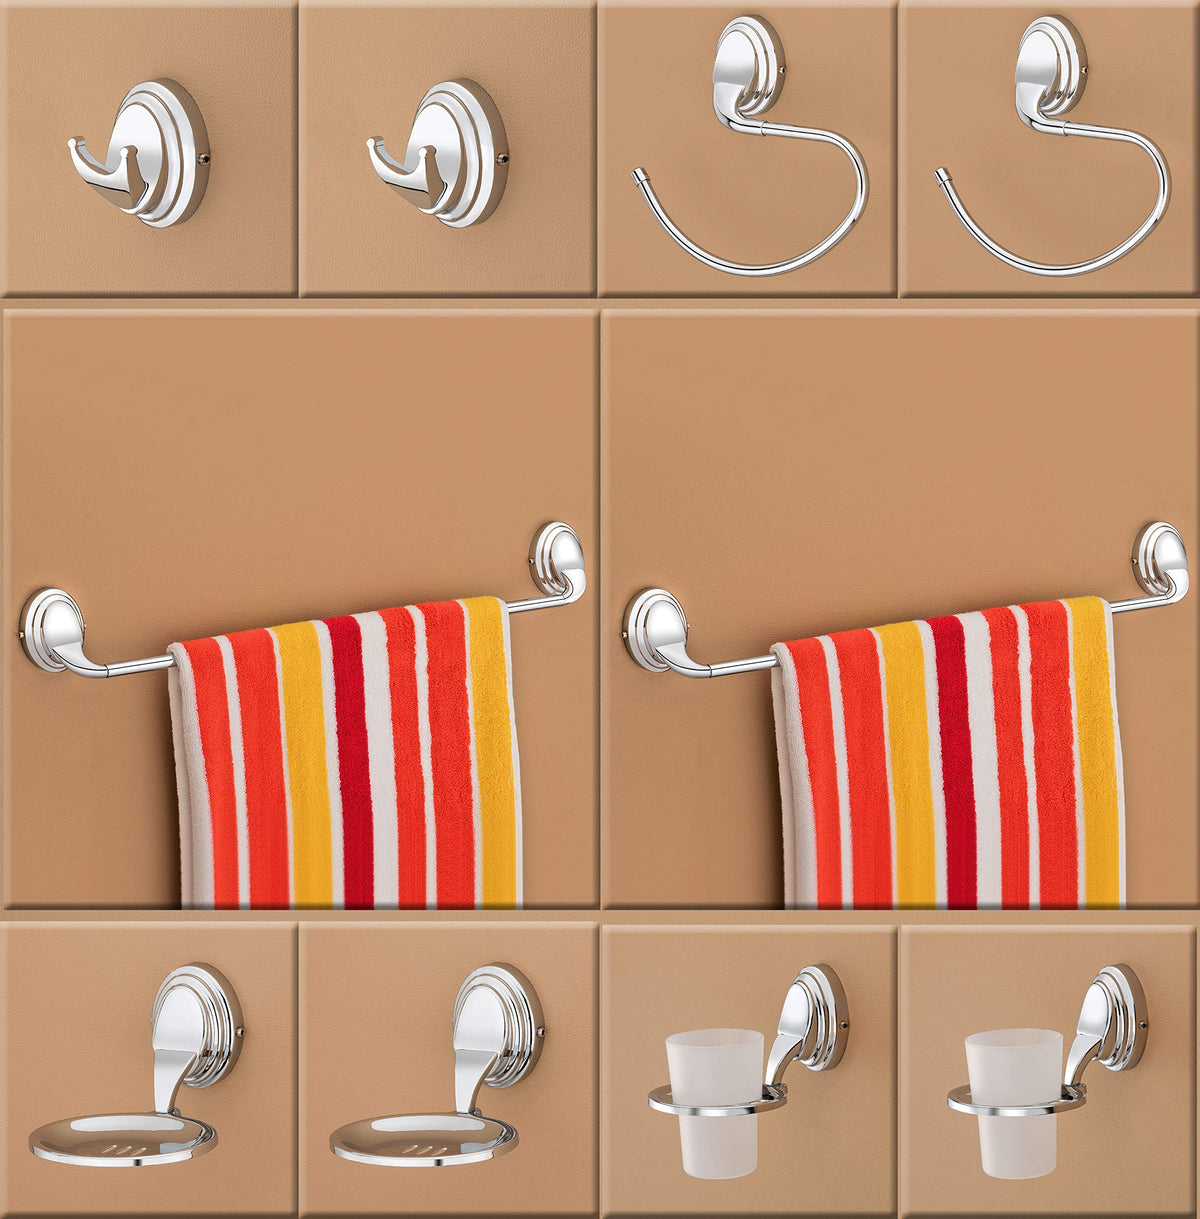 Plantex Stainless Steel 304 Grade Bathroom Accessories Set/Bathroom Hanger for Towel/Towel Bar/Napkin Ring/Tumbler Holder/Soap Dish/Robe Hook (Cubic - Pack of 10)